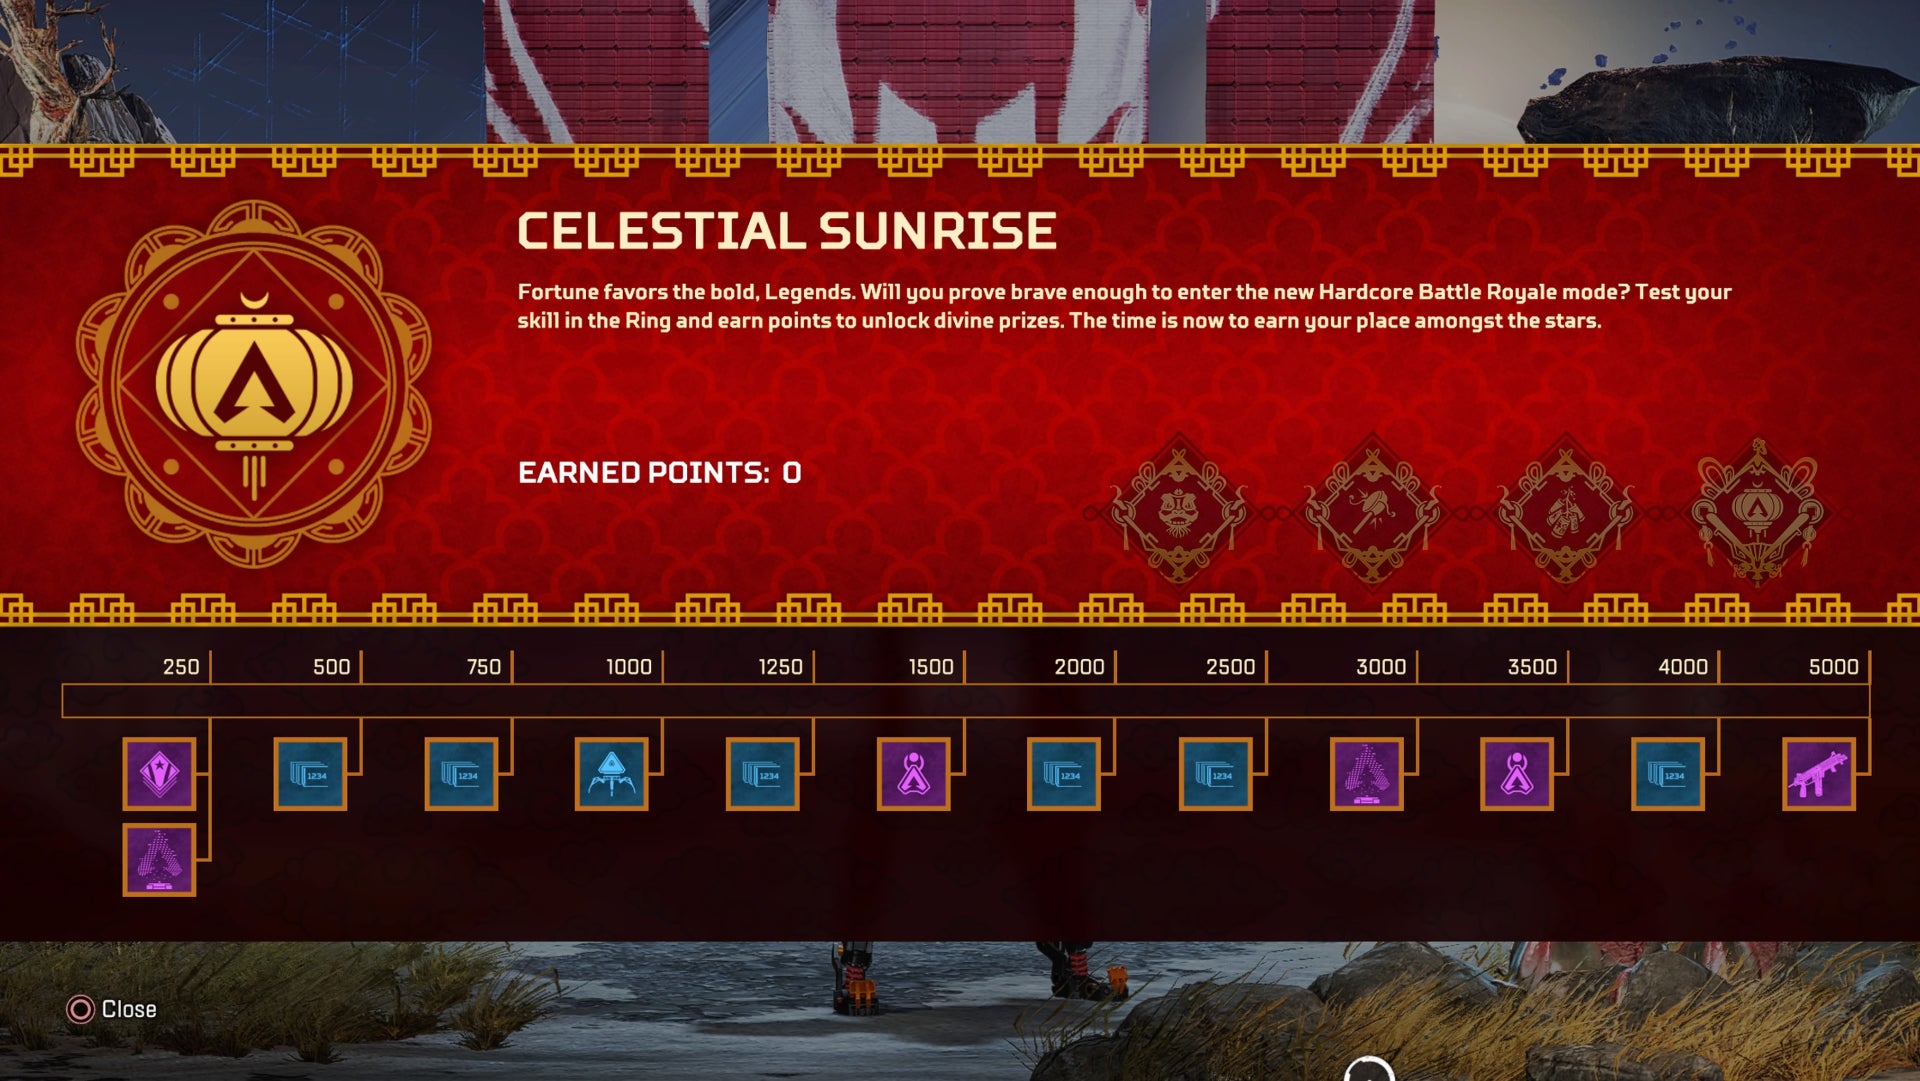 Apex Legends Celestial Sunrise Collection Event points tracker